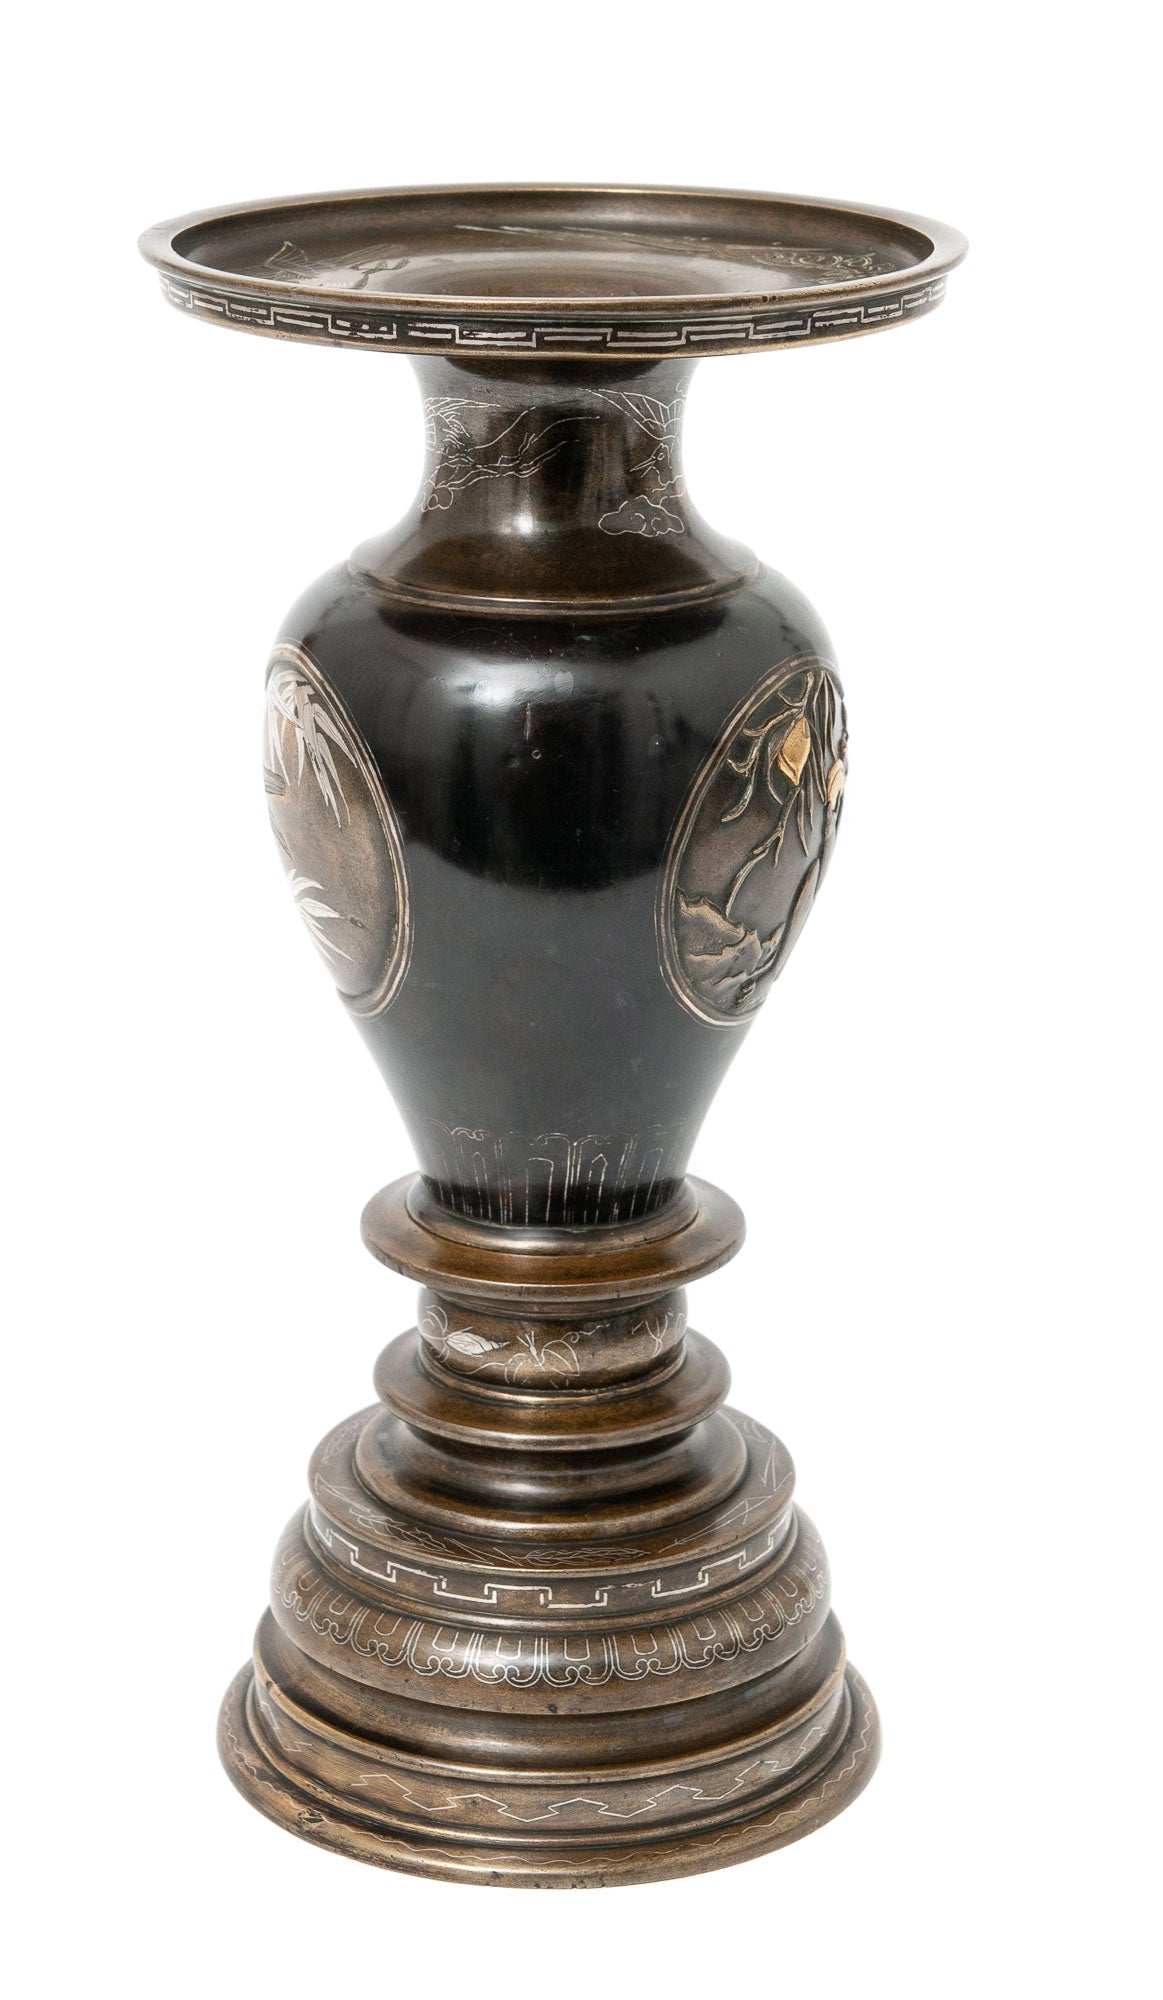 Fine Antique Meiji Period Japanese Bronze & Mixed Metal Inlaid Patinated Vase (Code 1463)